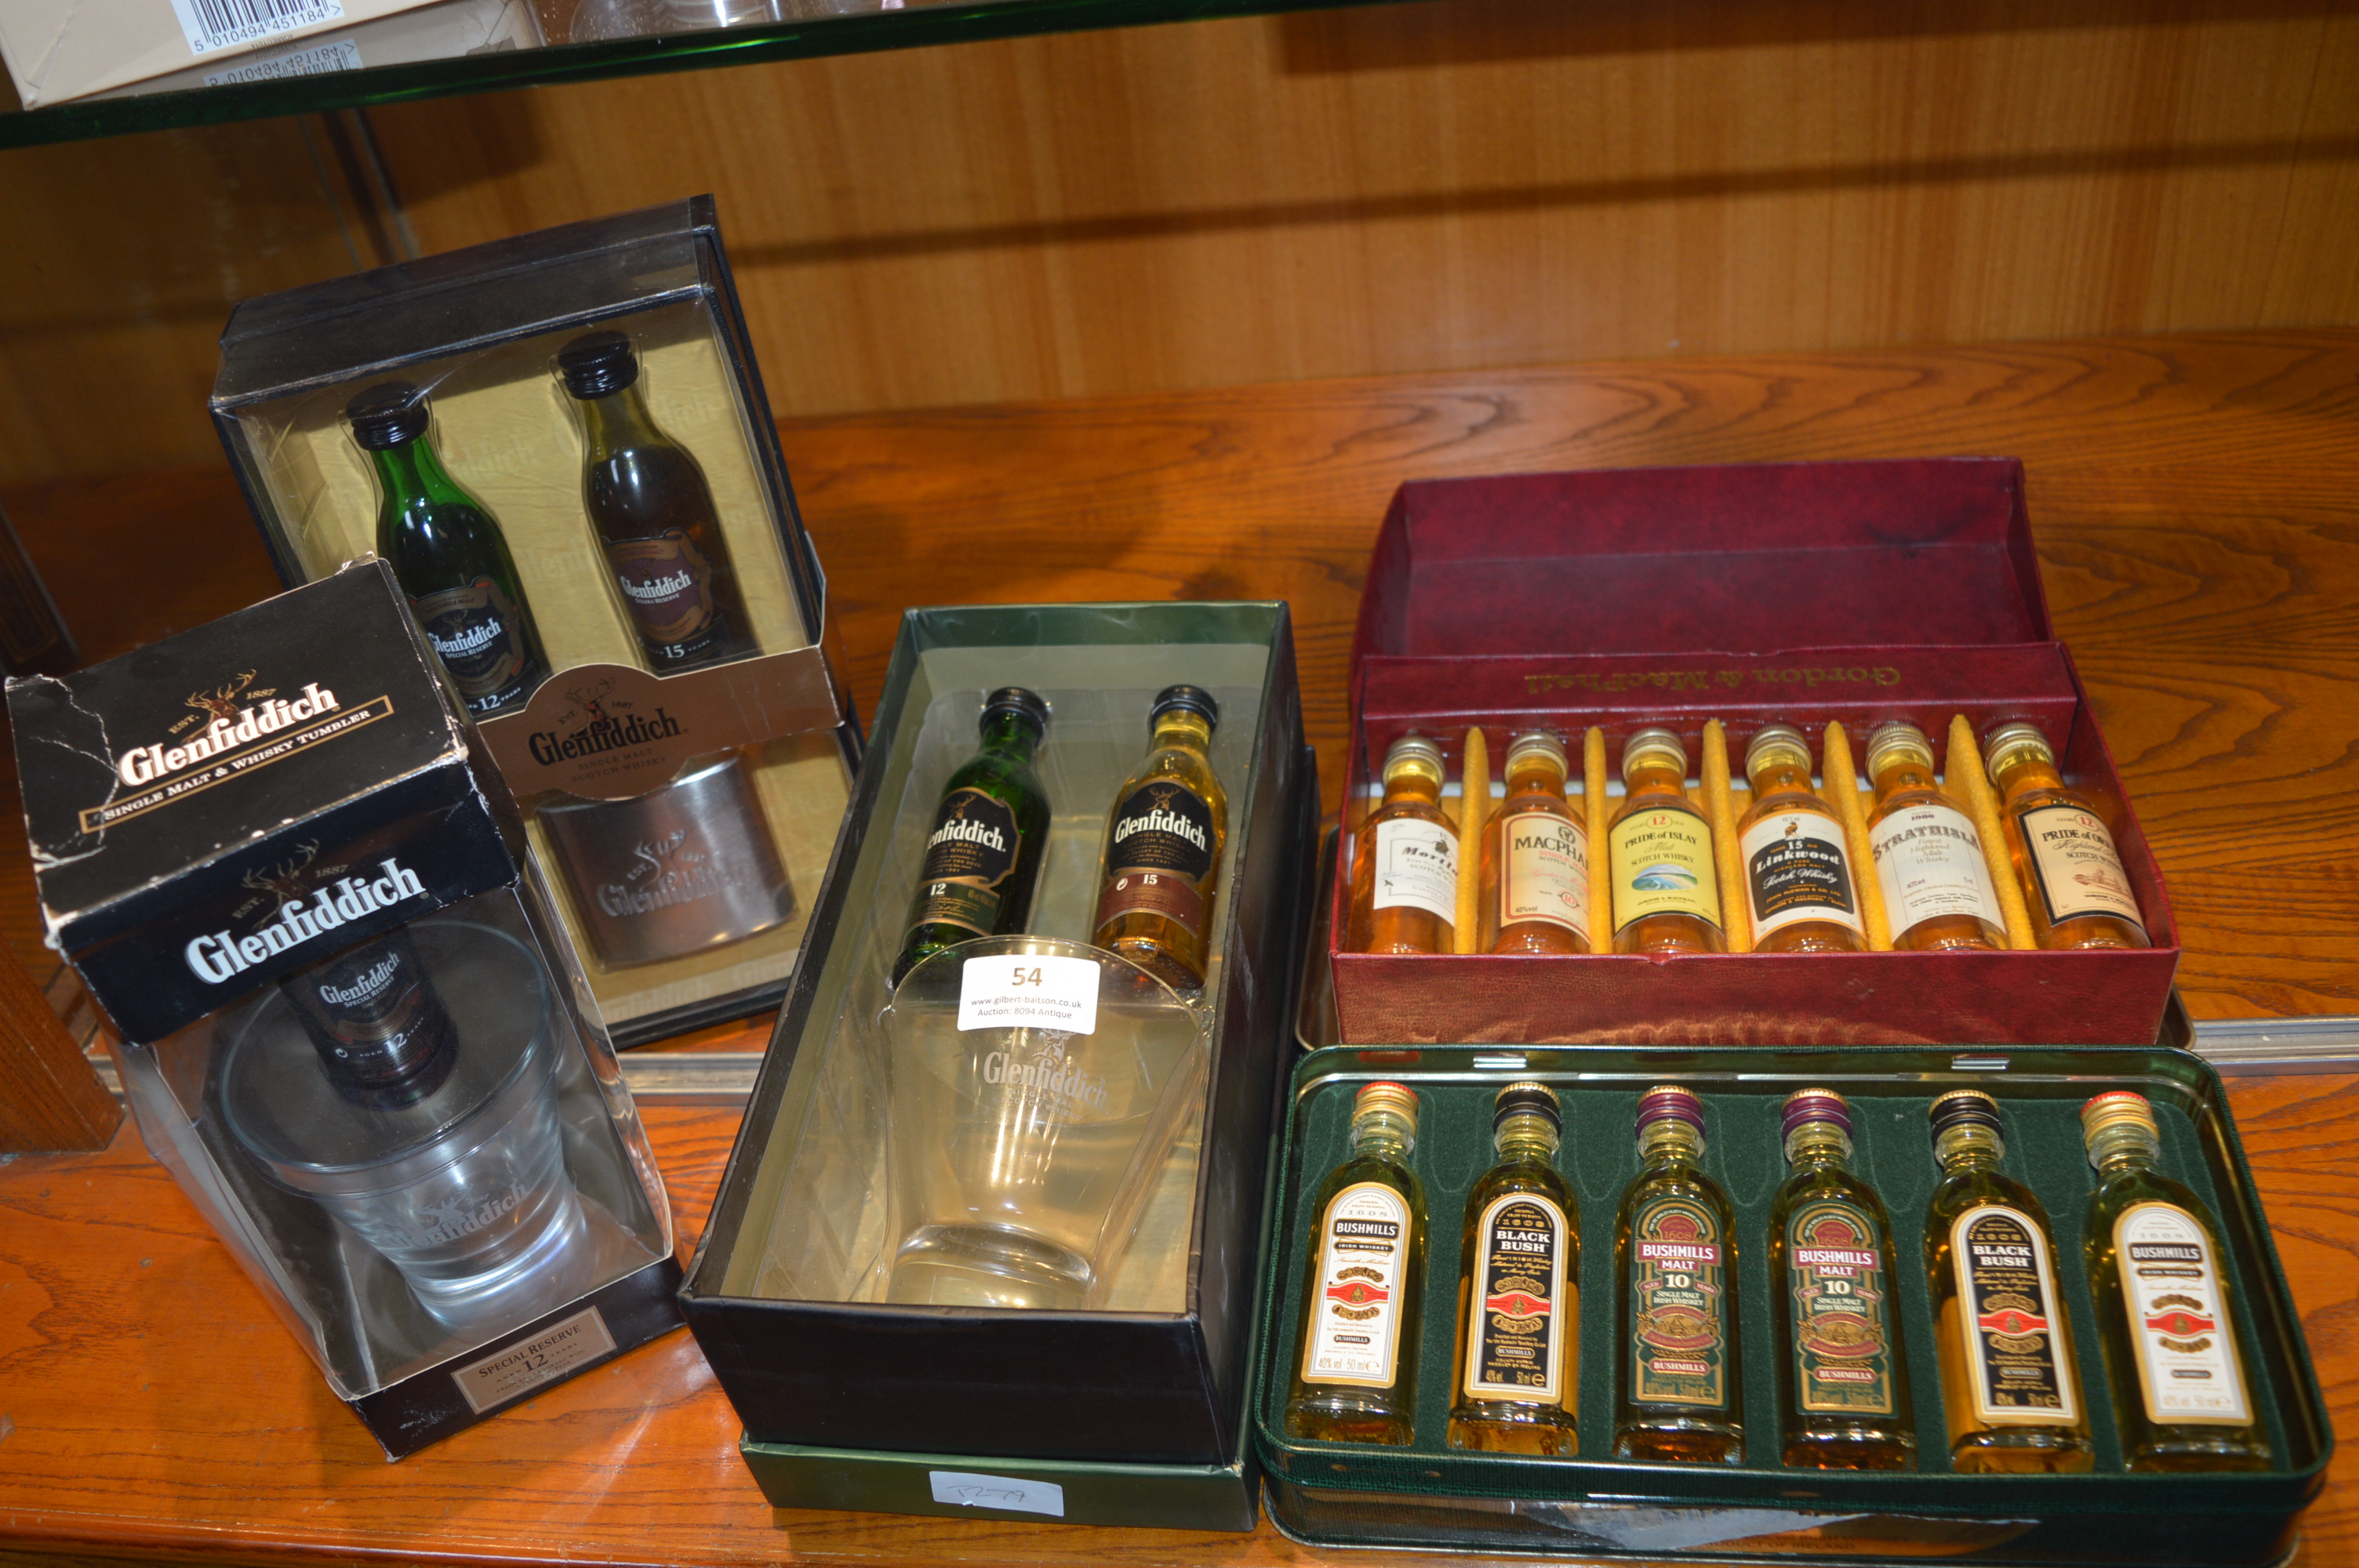 Miniature Whiskys - Glenfiddich, Bushmills etc